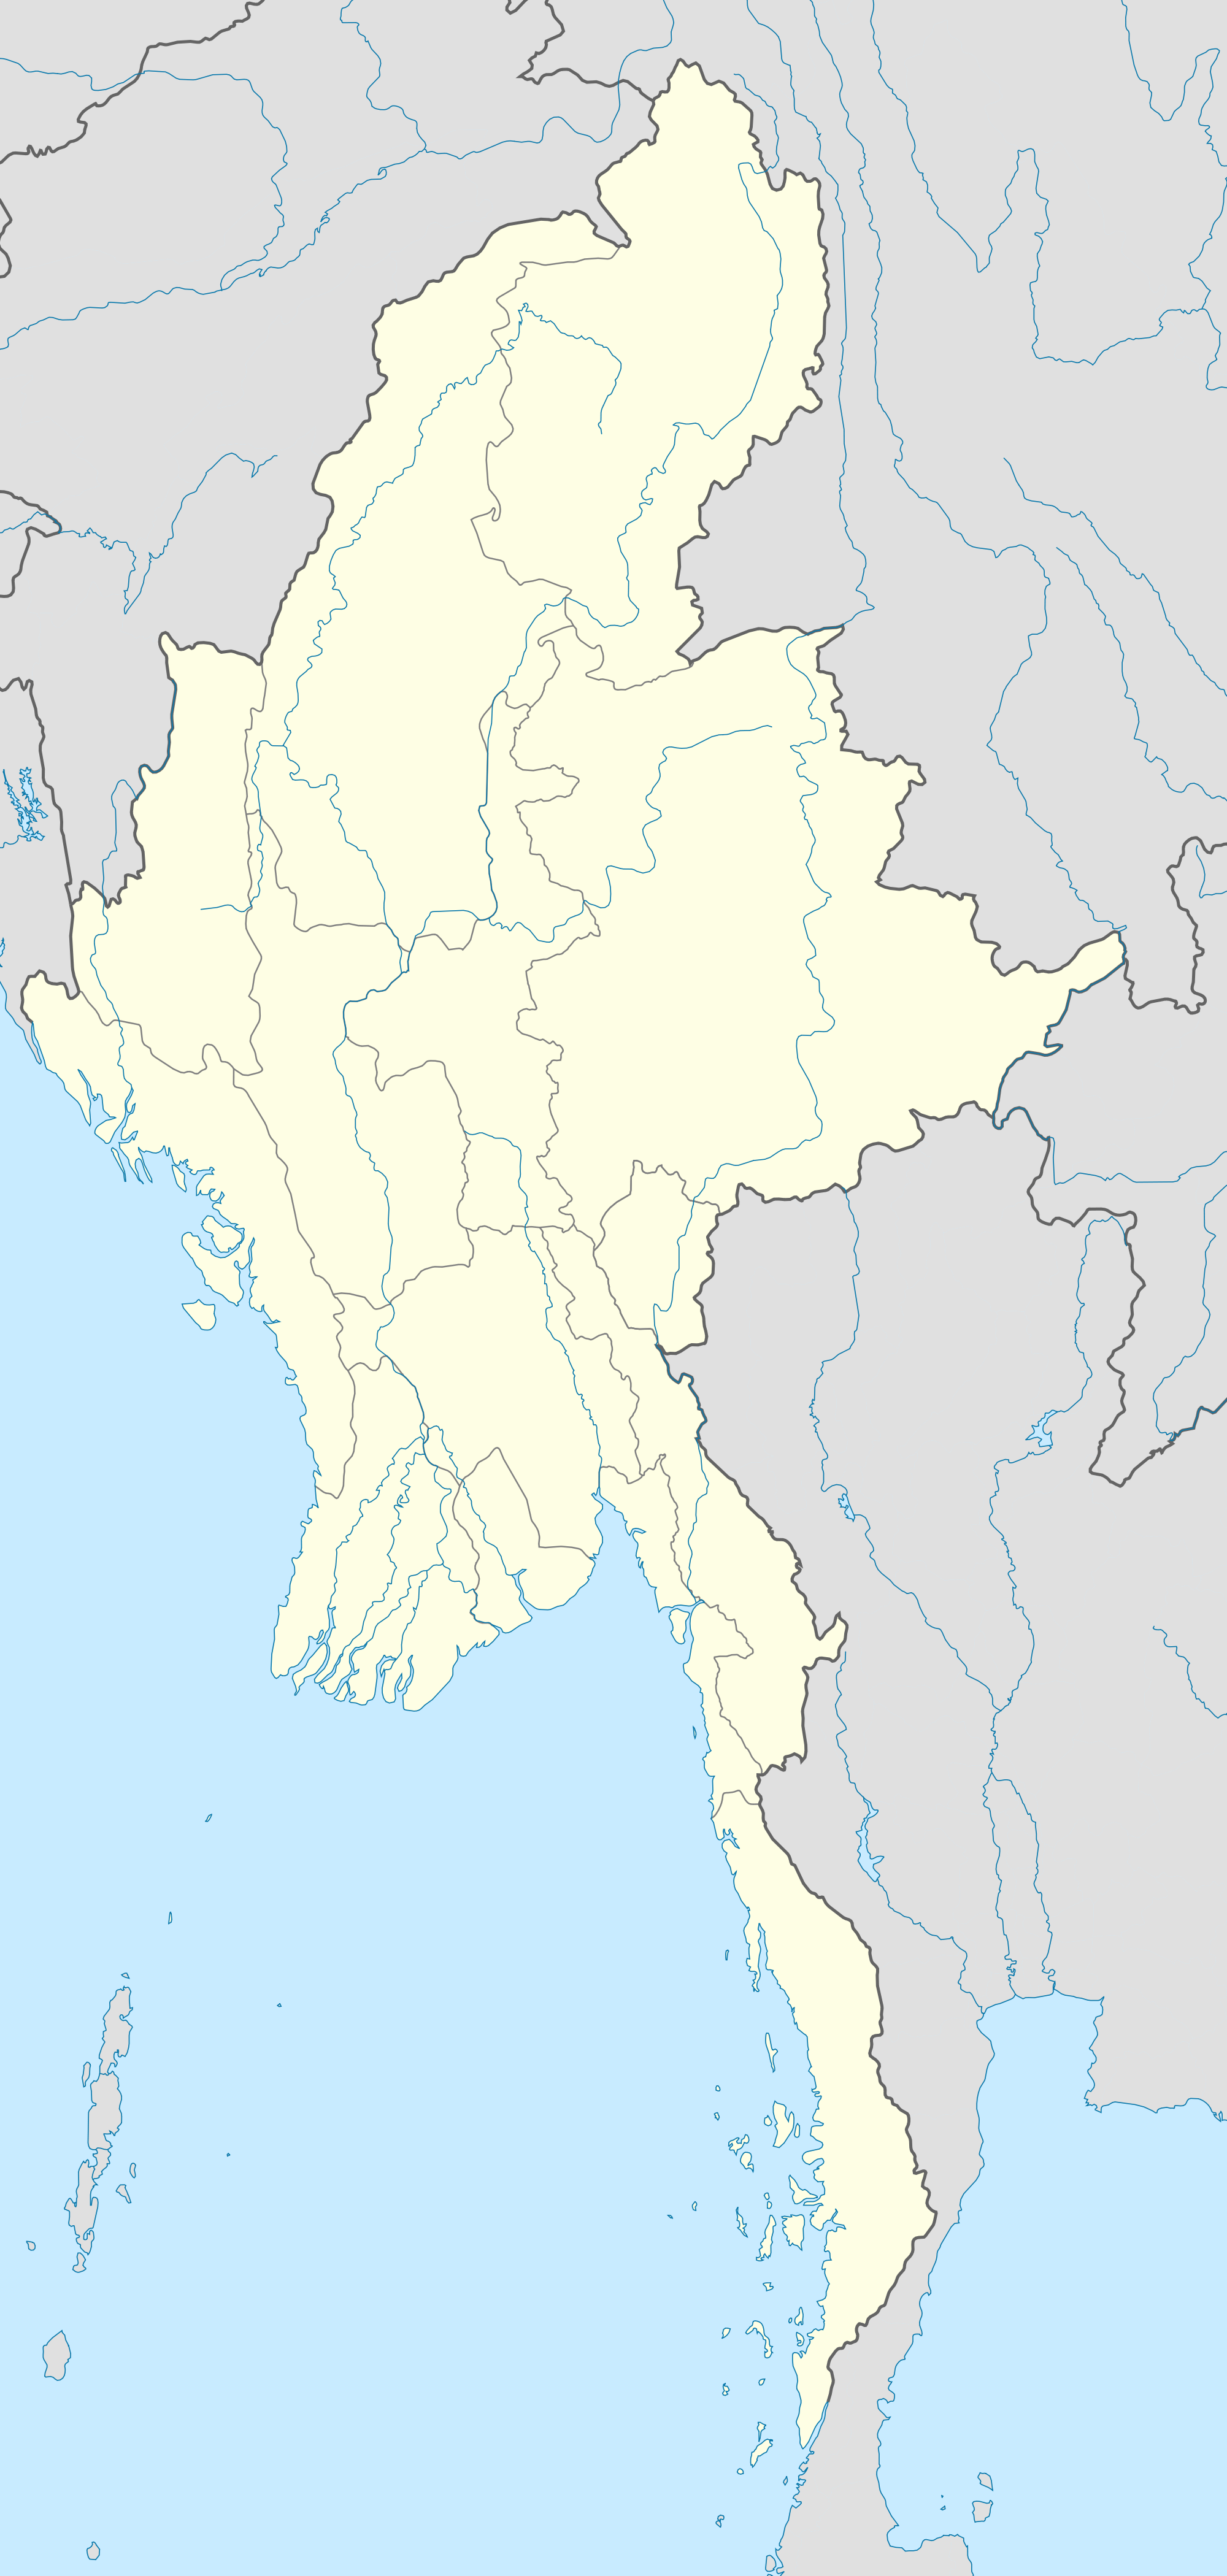 Myanmar Civil War detailed map/doc is located in Myanmar